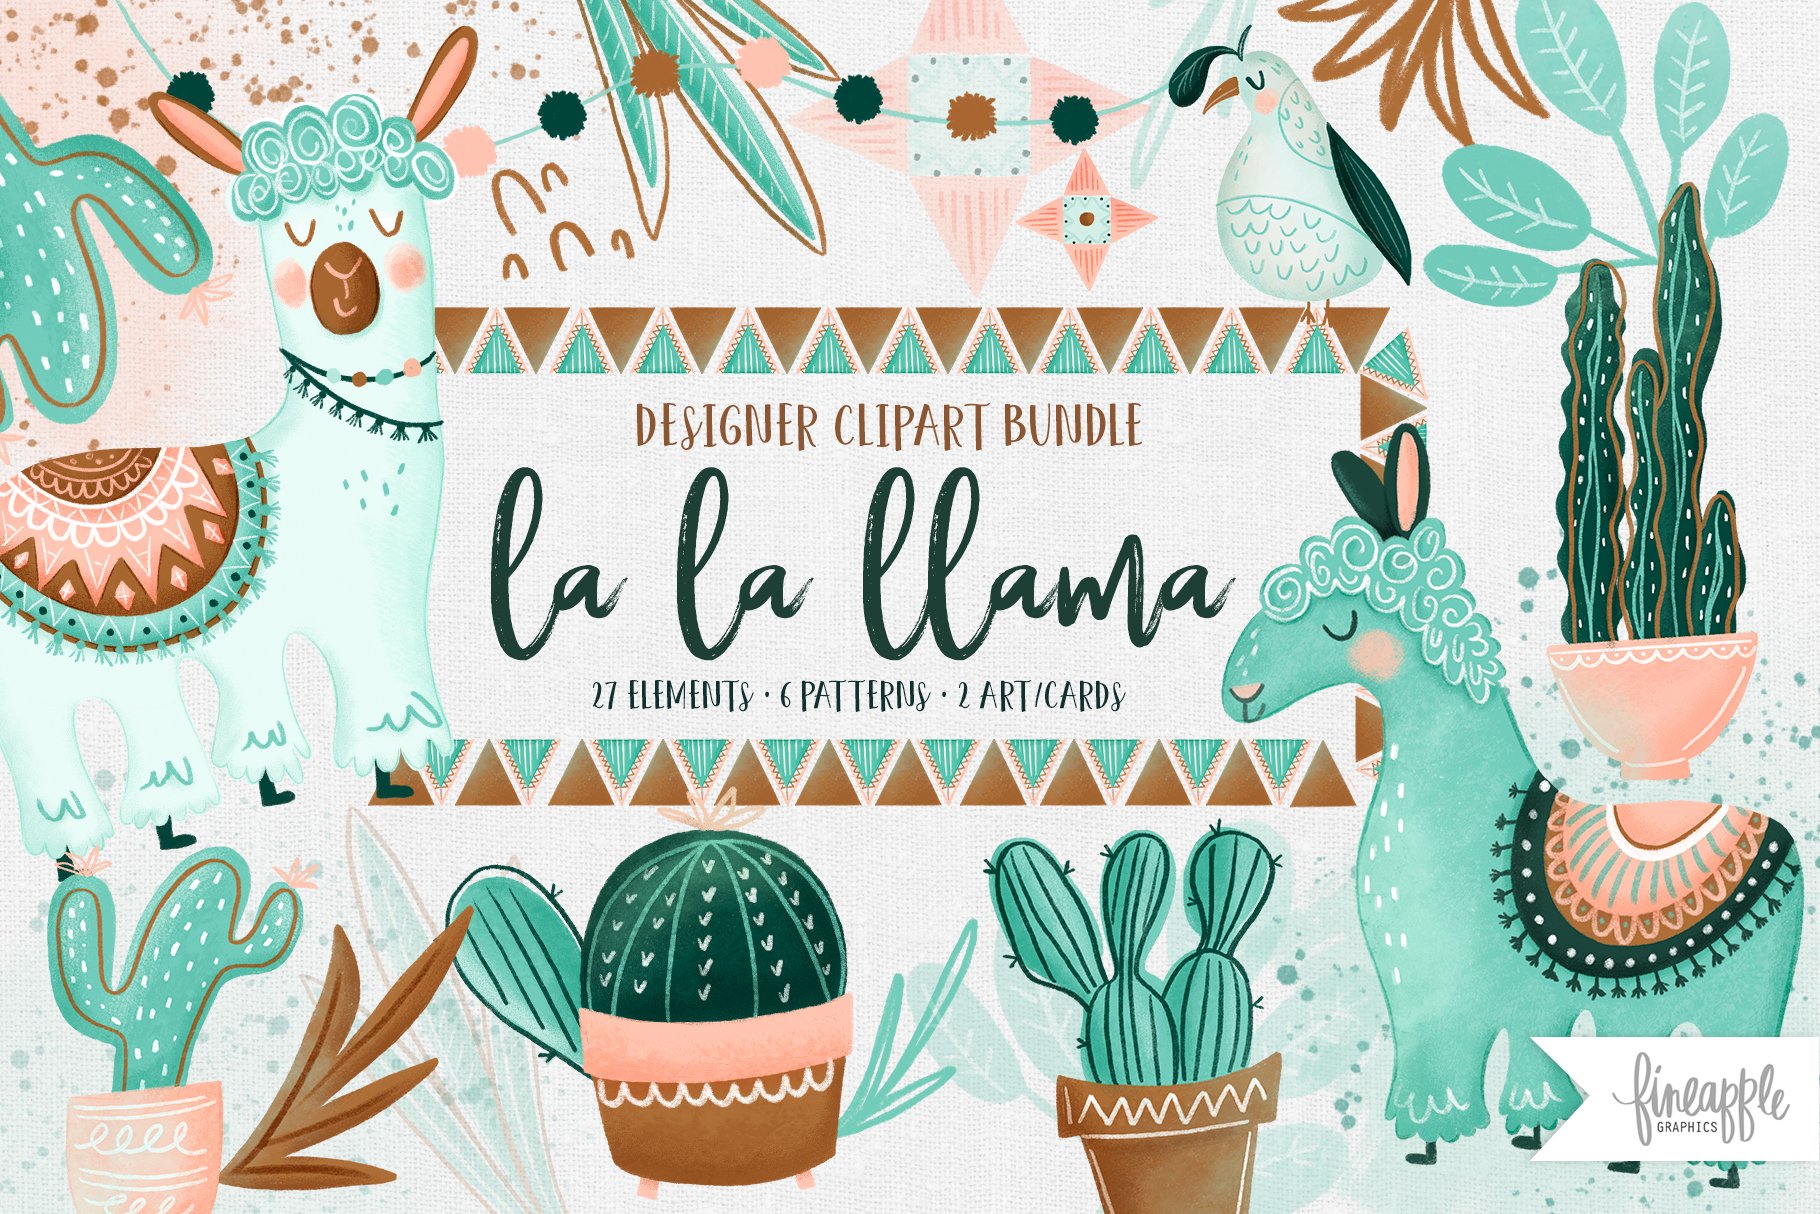 La la Llama Clipart cover image.